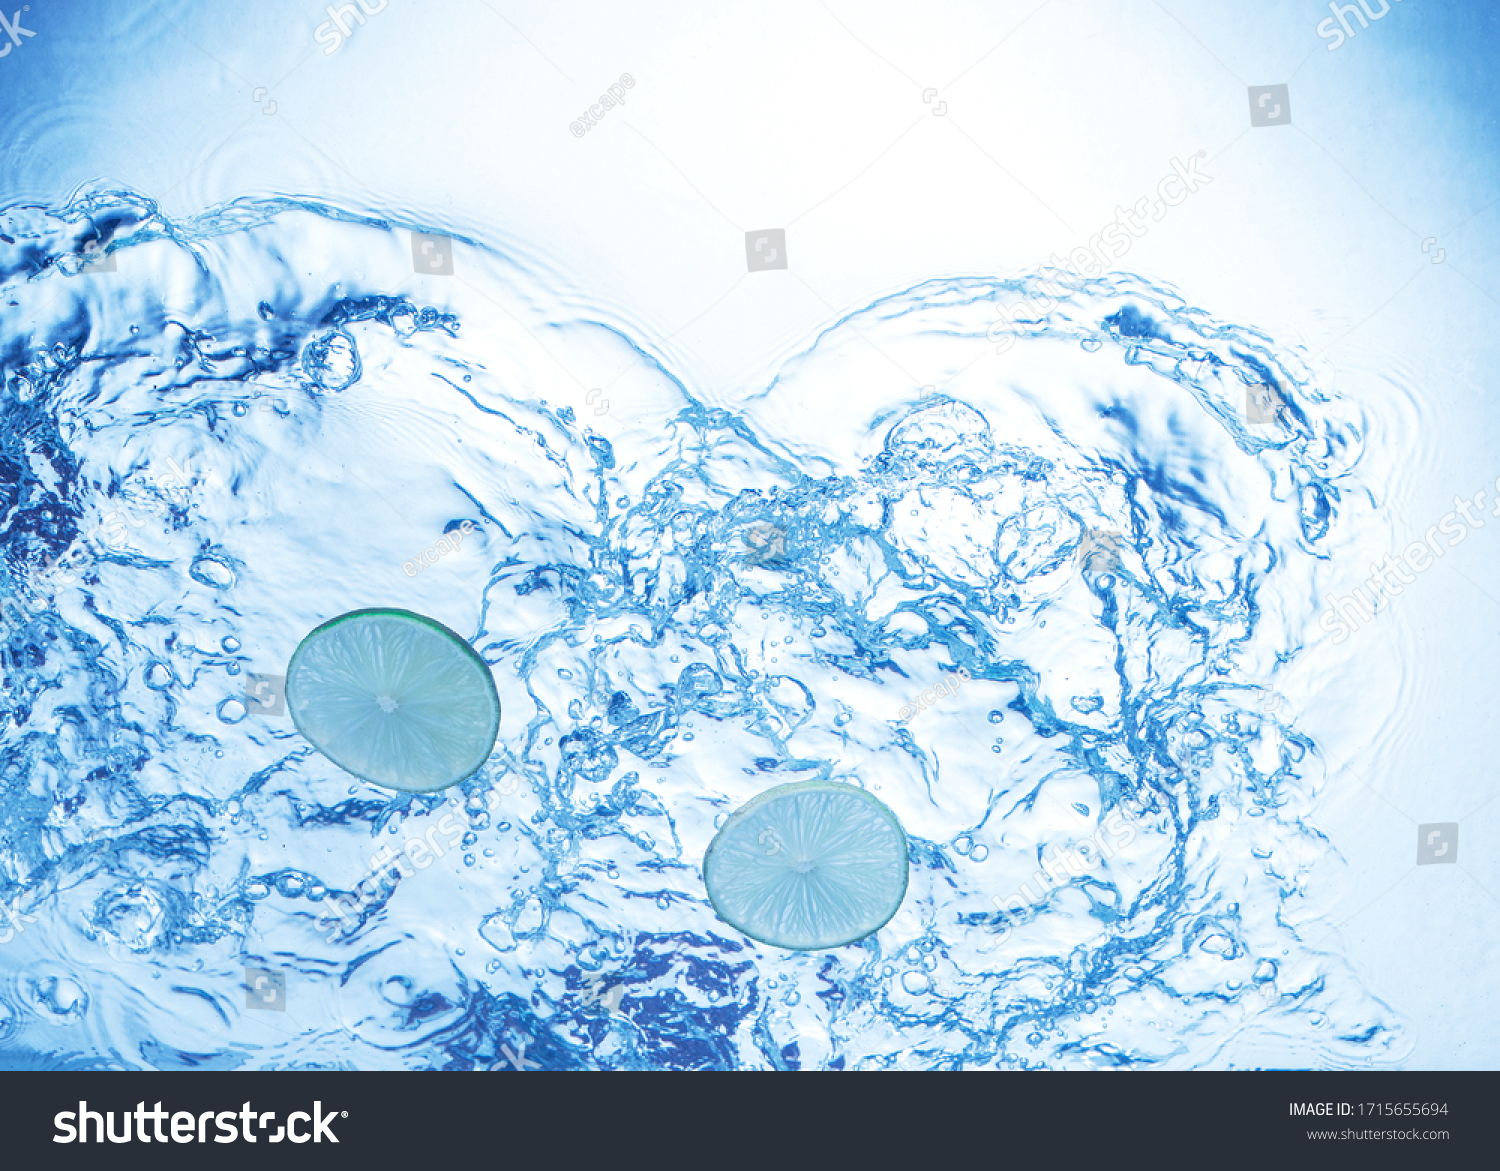 Lemon cut in water - viewed from under light blue water. #1715655694